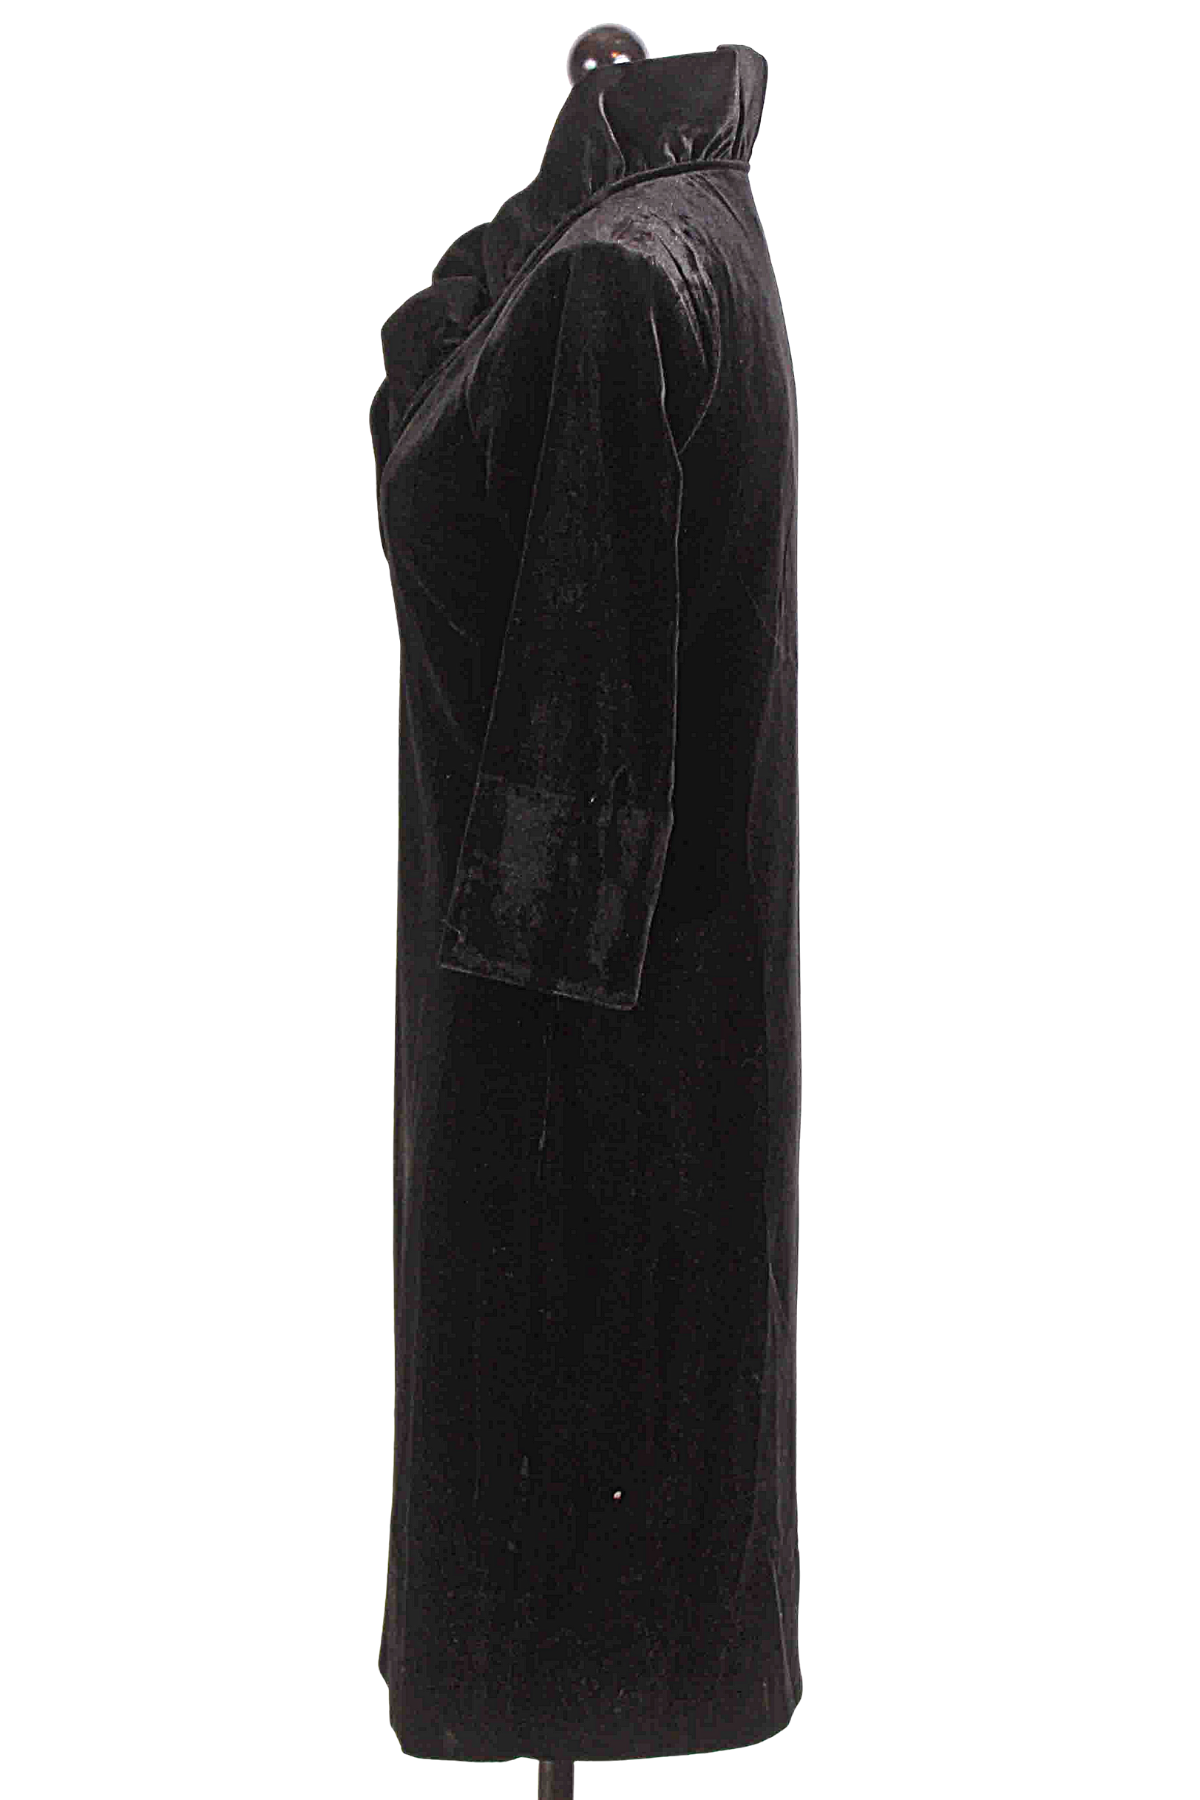 side view of Black Silky Velvet Ruffle Neck Dress by Gretchen Scott